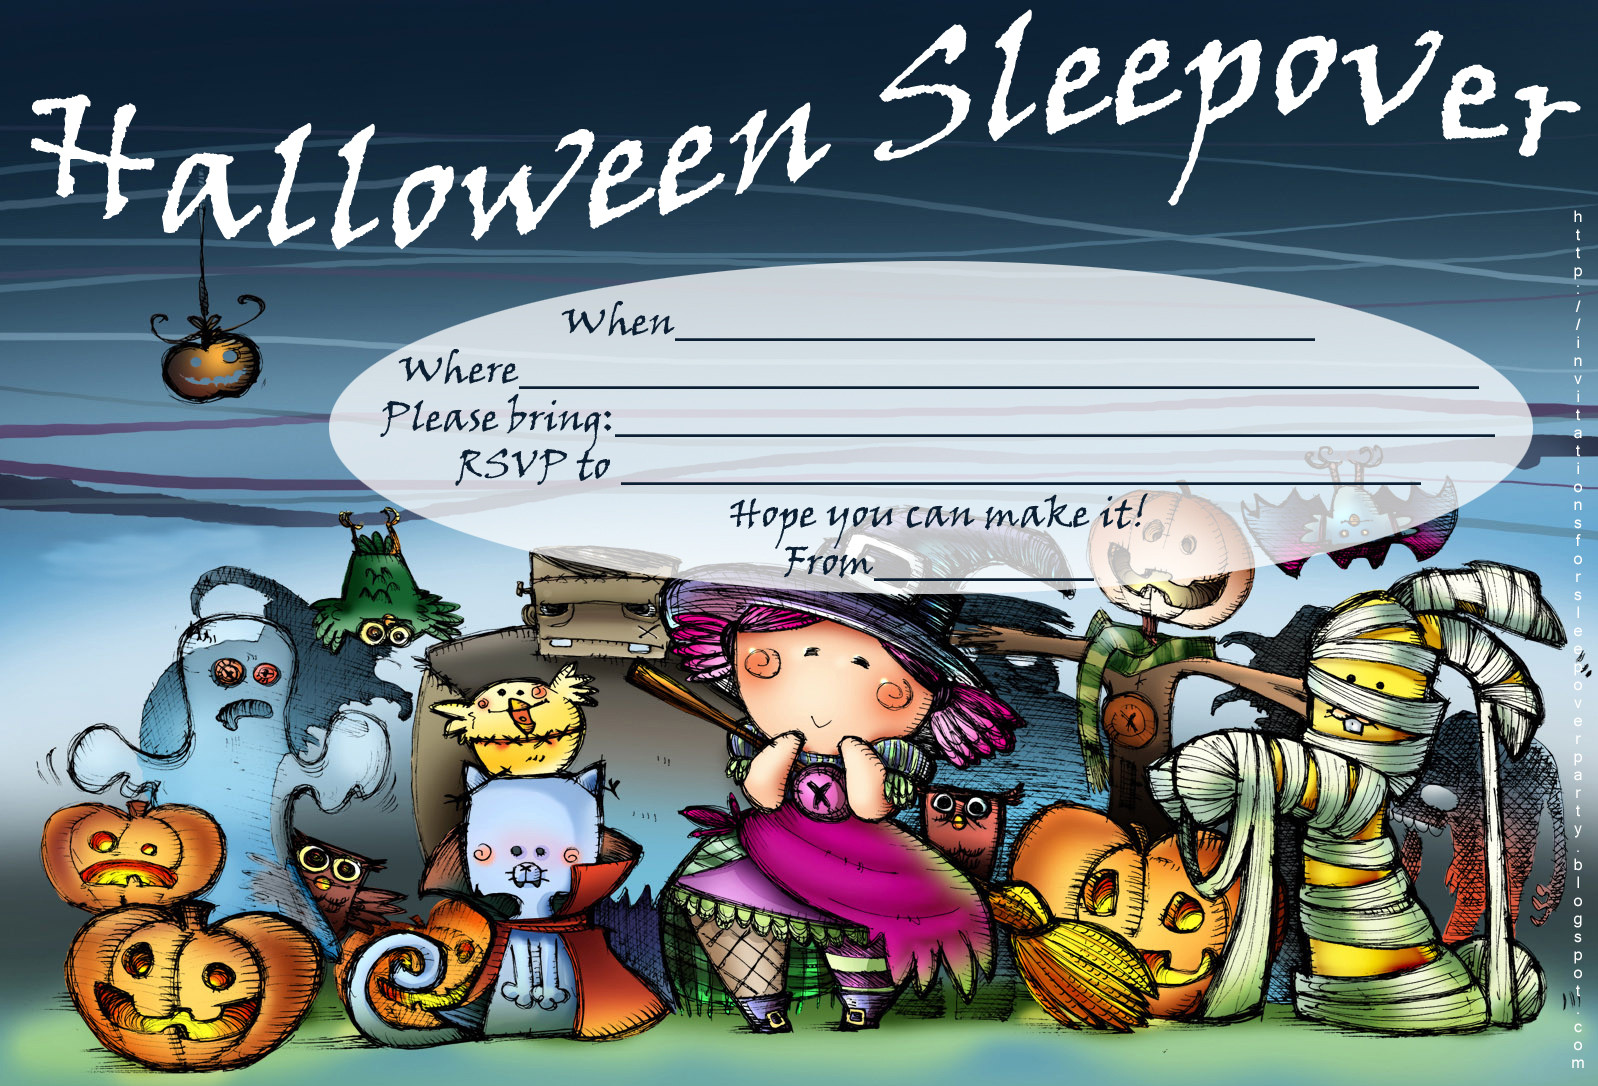 Halloween Slumber Party Ideas
 INVITATIONS FOR SLEEPOVER PARTY